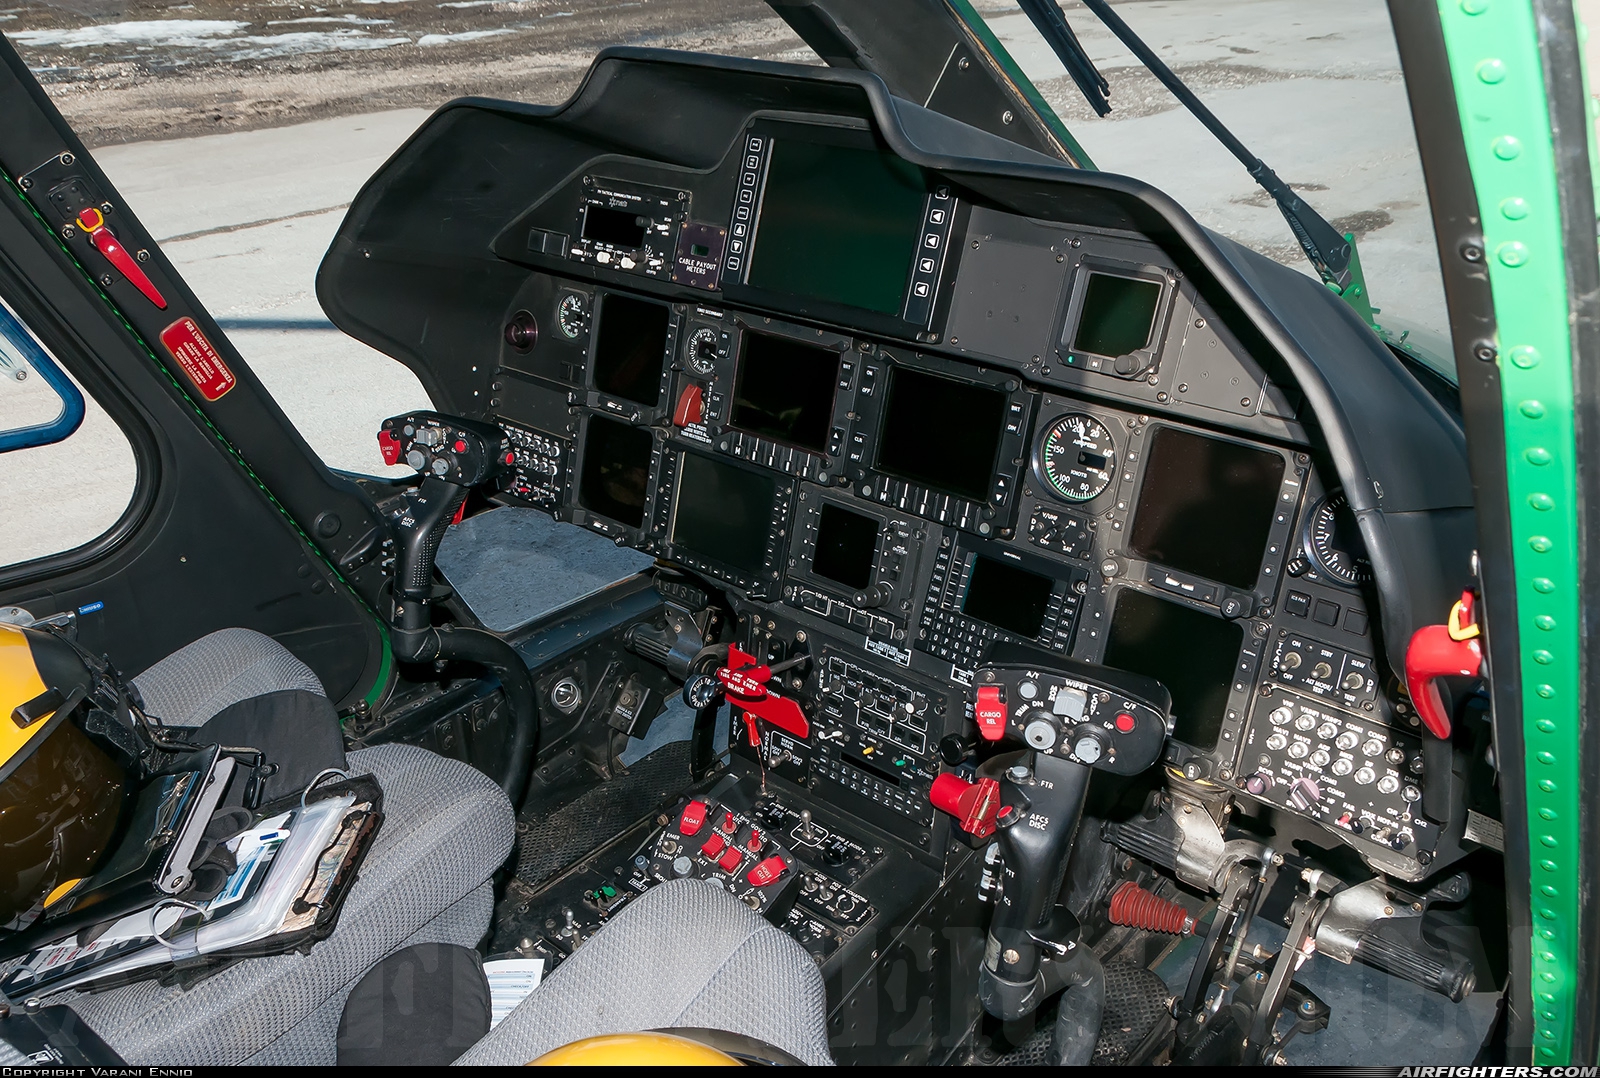 Italy - Guardia di Finanza AgustaWestland AW-109N Nexus MM81680 at Cortina d'Ampezzo (LIDI), Italy